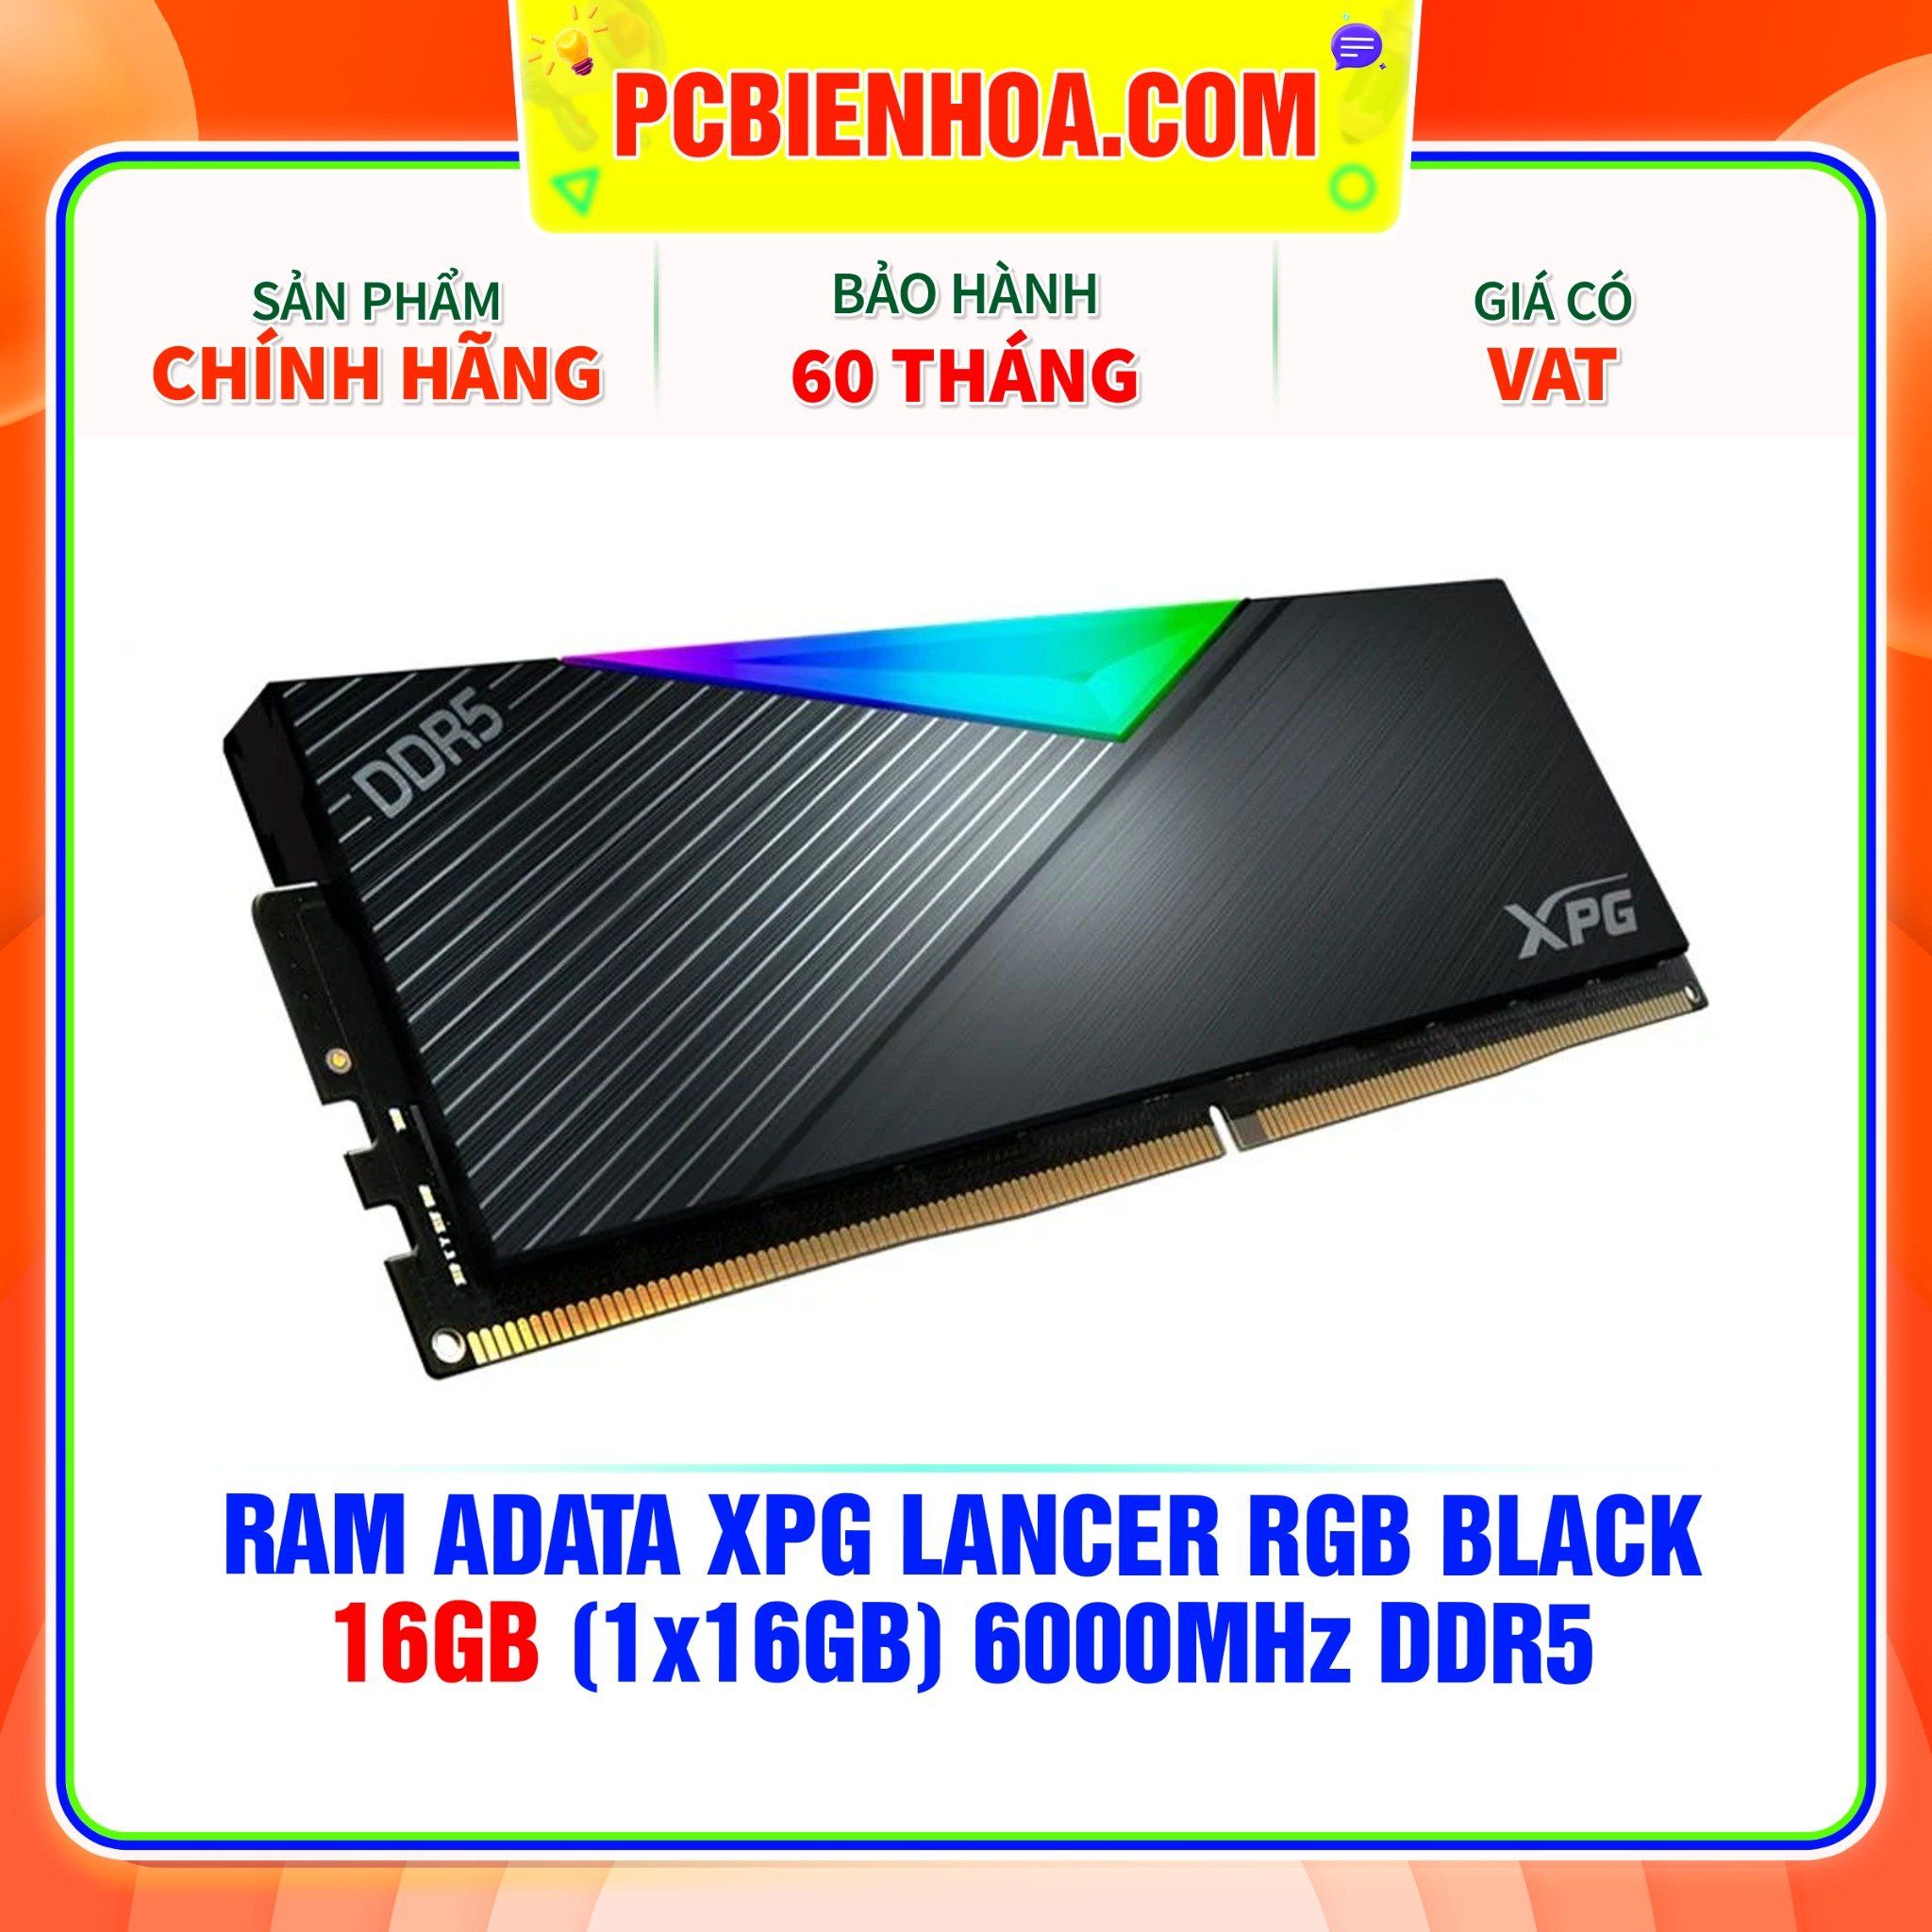  RAM ADATA XPG LANCER RGB BLACK - 16GB (1x16GB) 6000MHz DDR5 